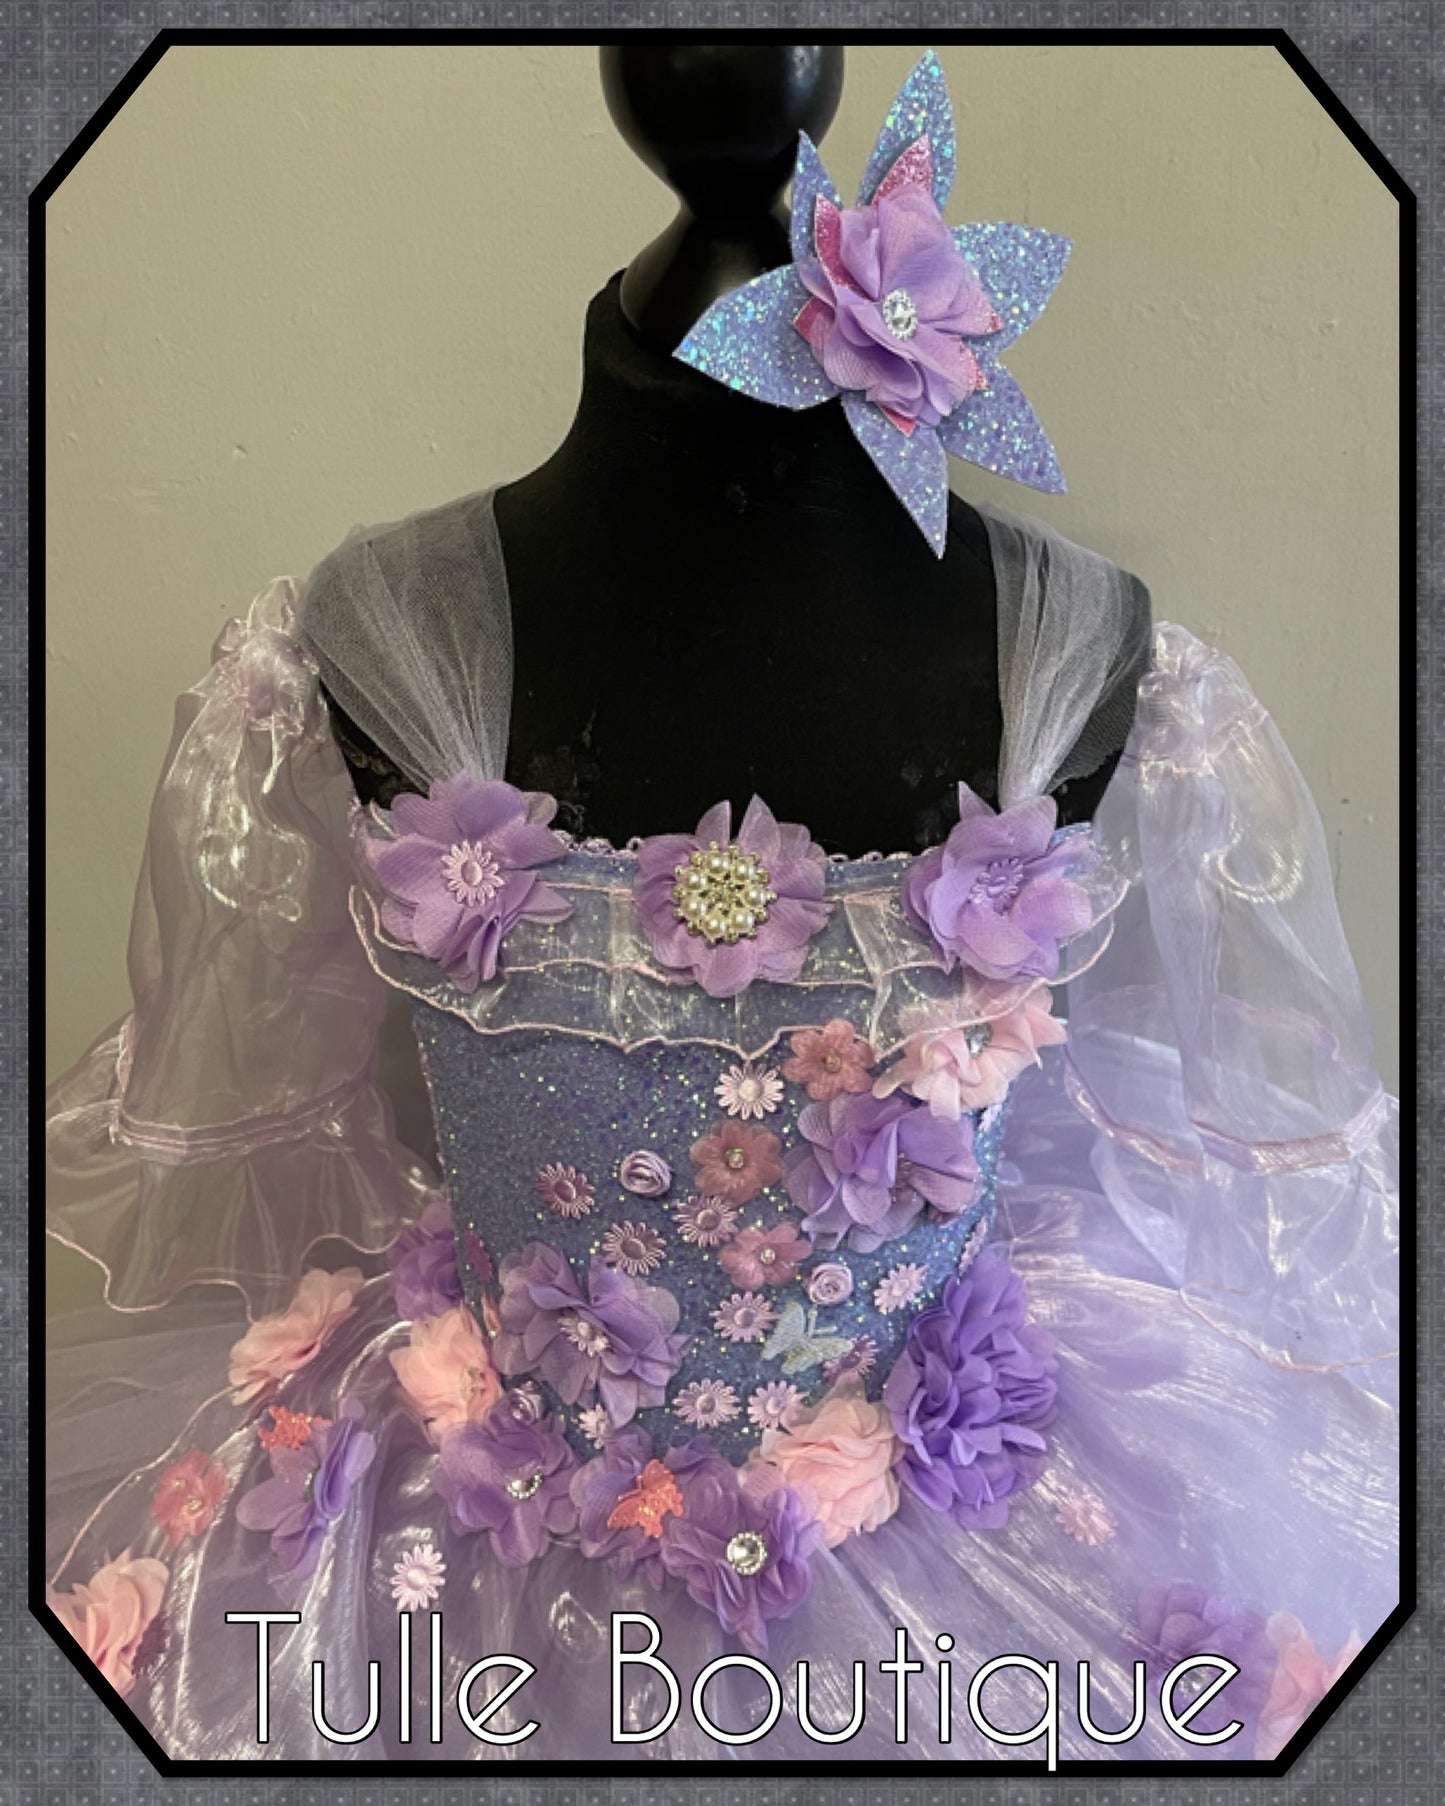 Encanto Isabela madrigal floral birthday tutu dress